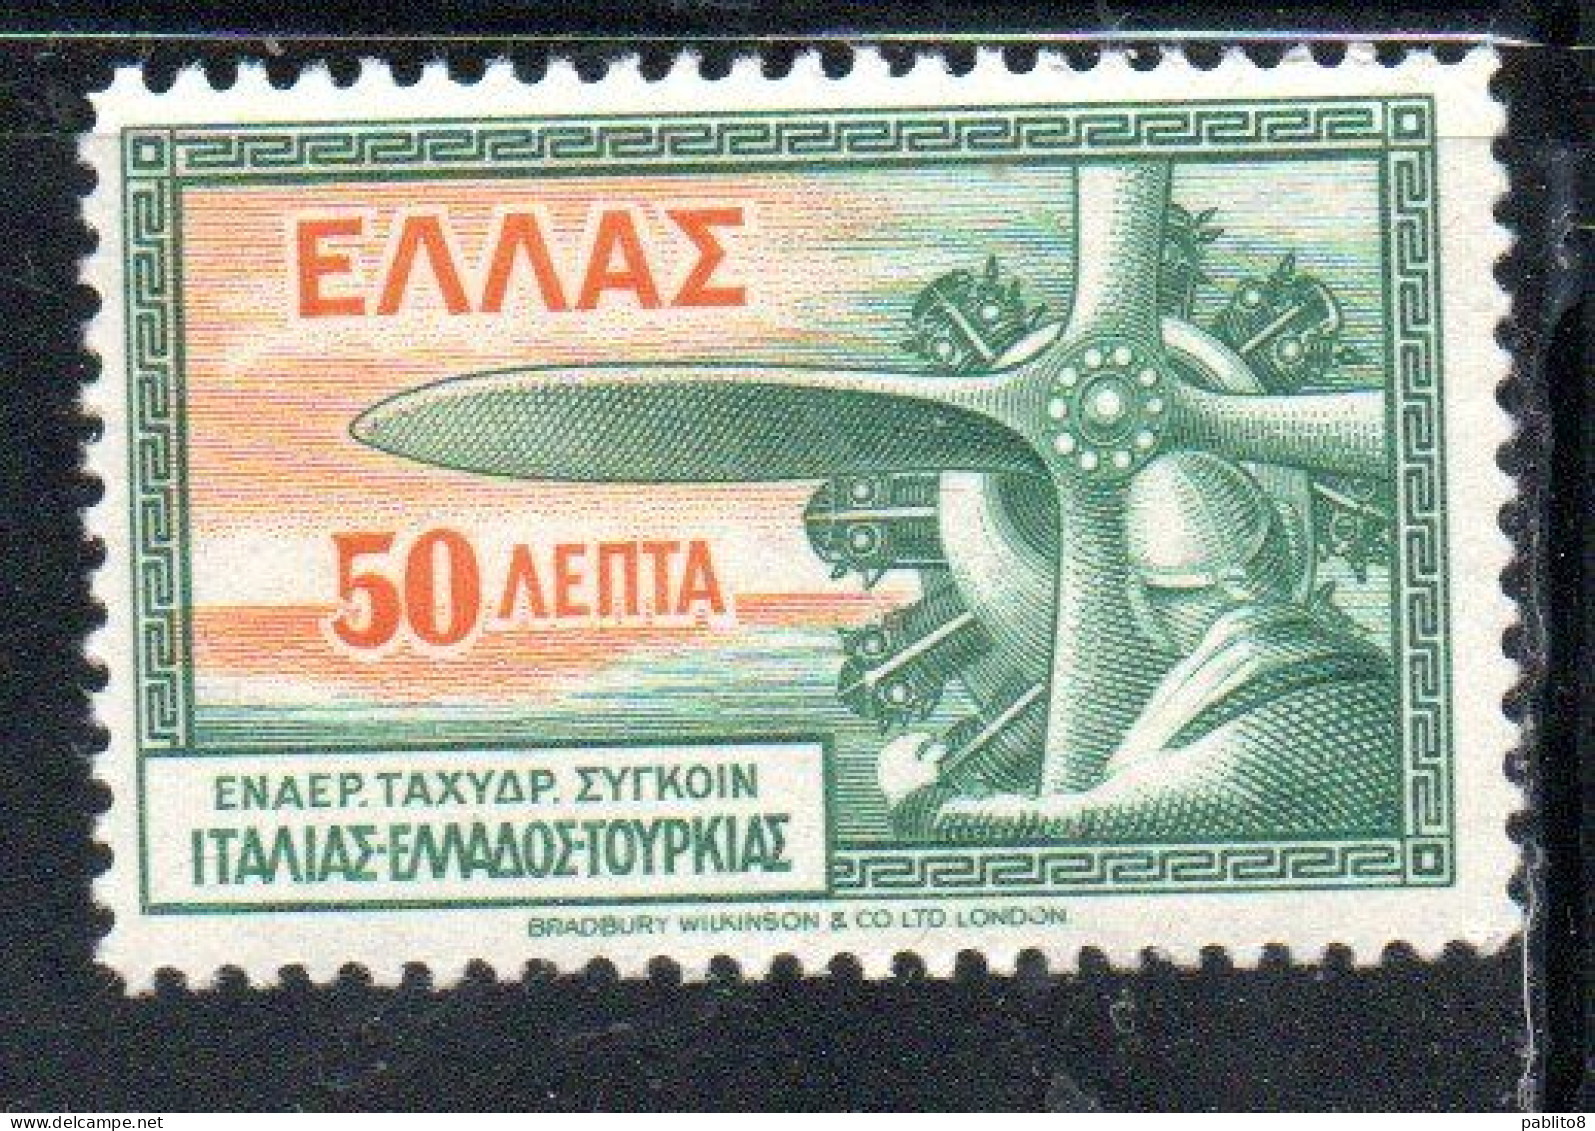 GREECE GRECIA ELLAS 1933 AIR POST MAIL AIRMAIL PROPELLER AND PILOT'S HEAD 50l MNH - Nuovi